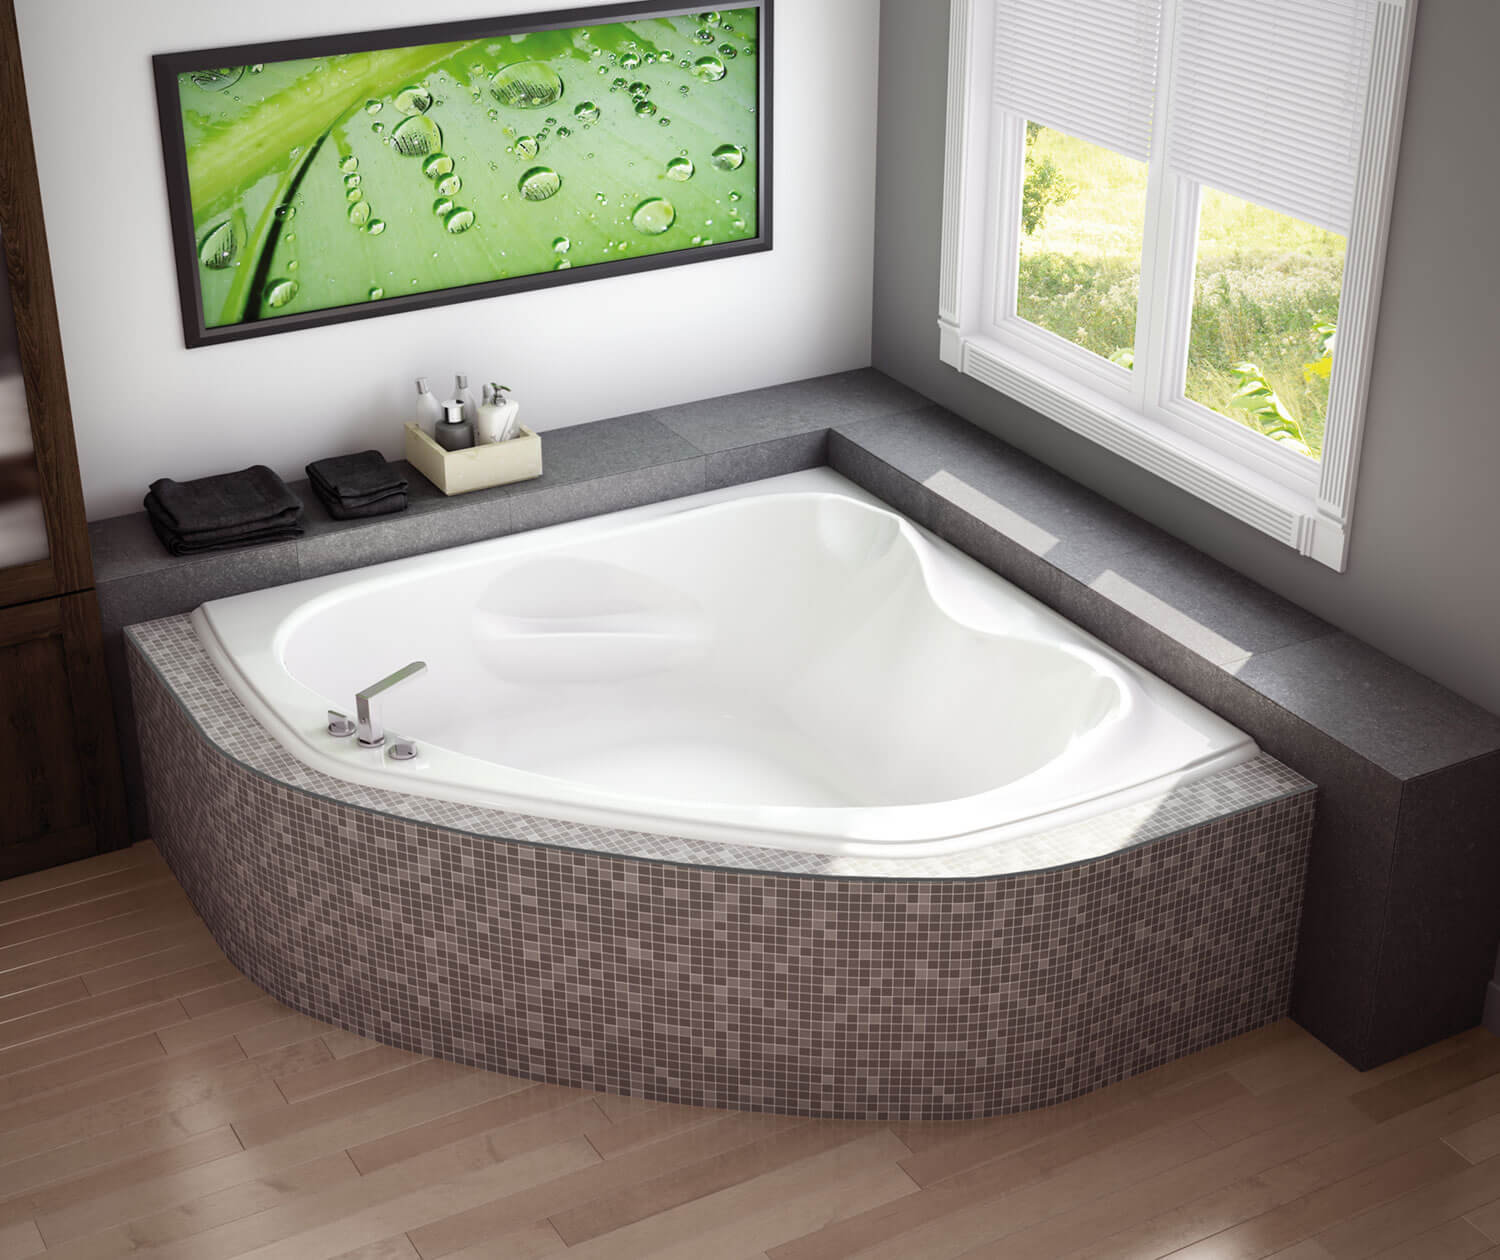 Murmur 5555 Acrylic Corner Center Drain Bathtub in White | Bath 